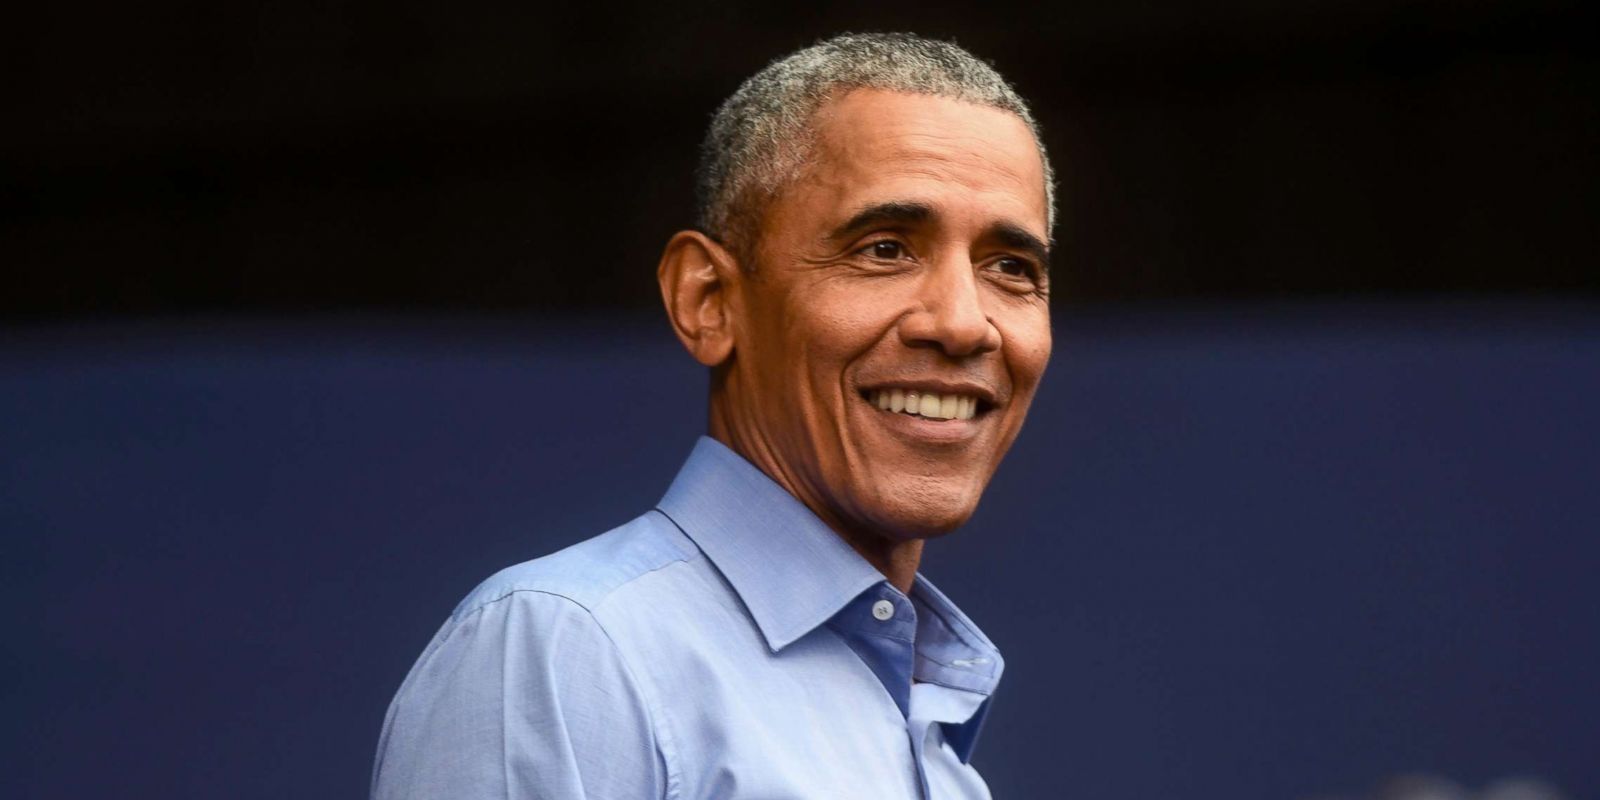 Barack Obama looks on while speaking onstage 